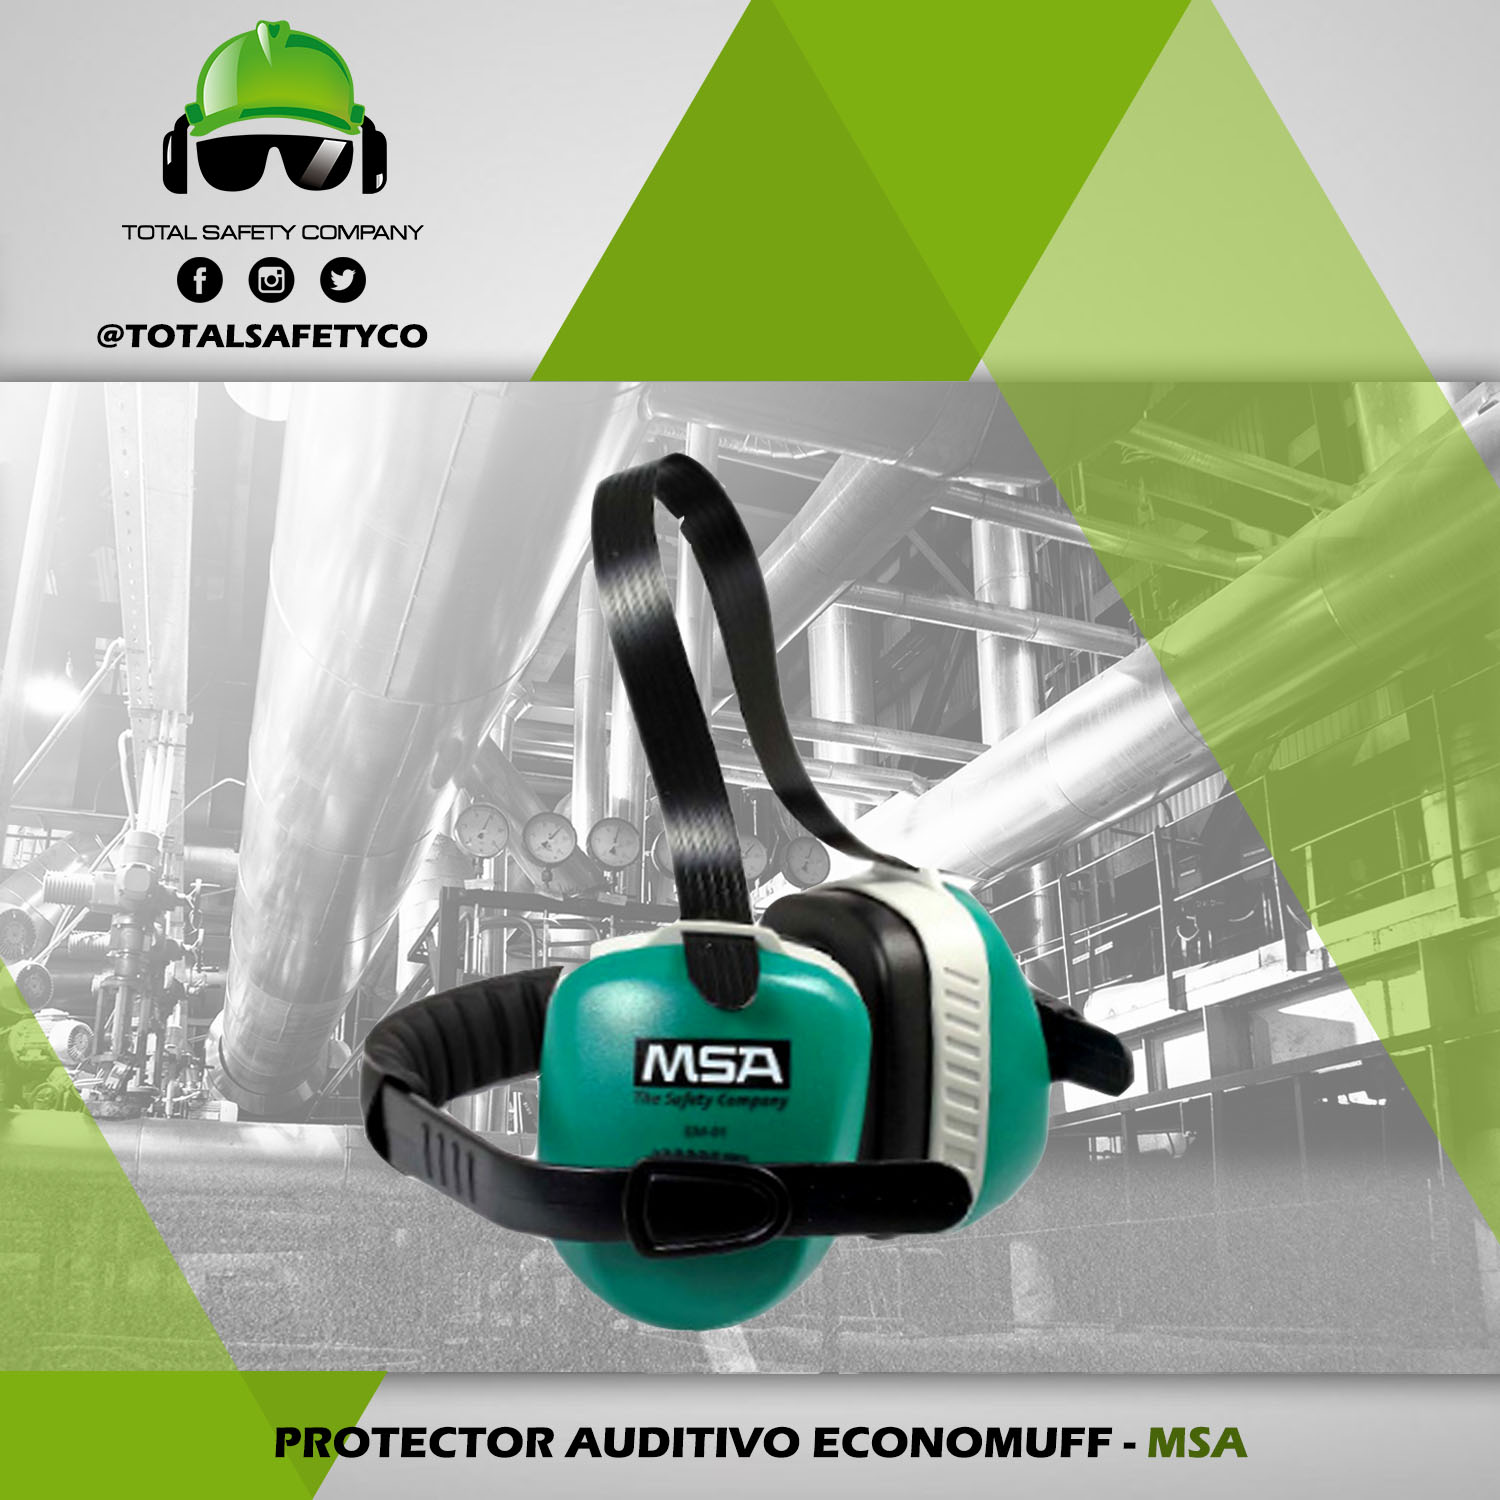 Protector auditivo economuff - MSA